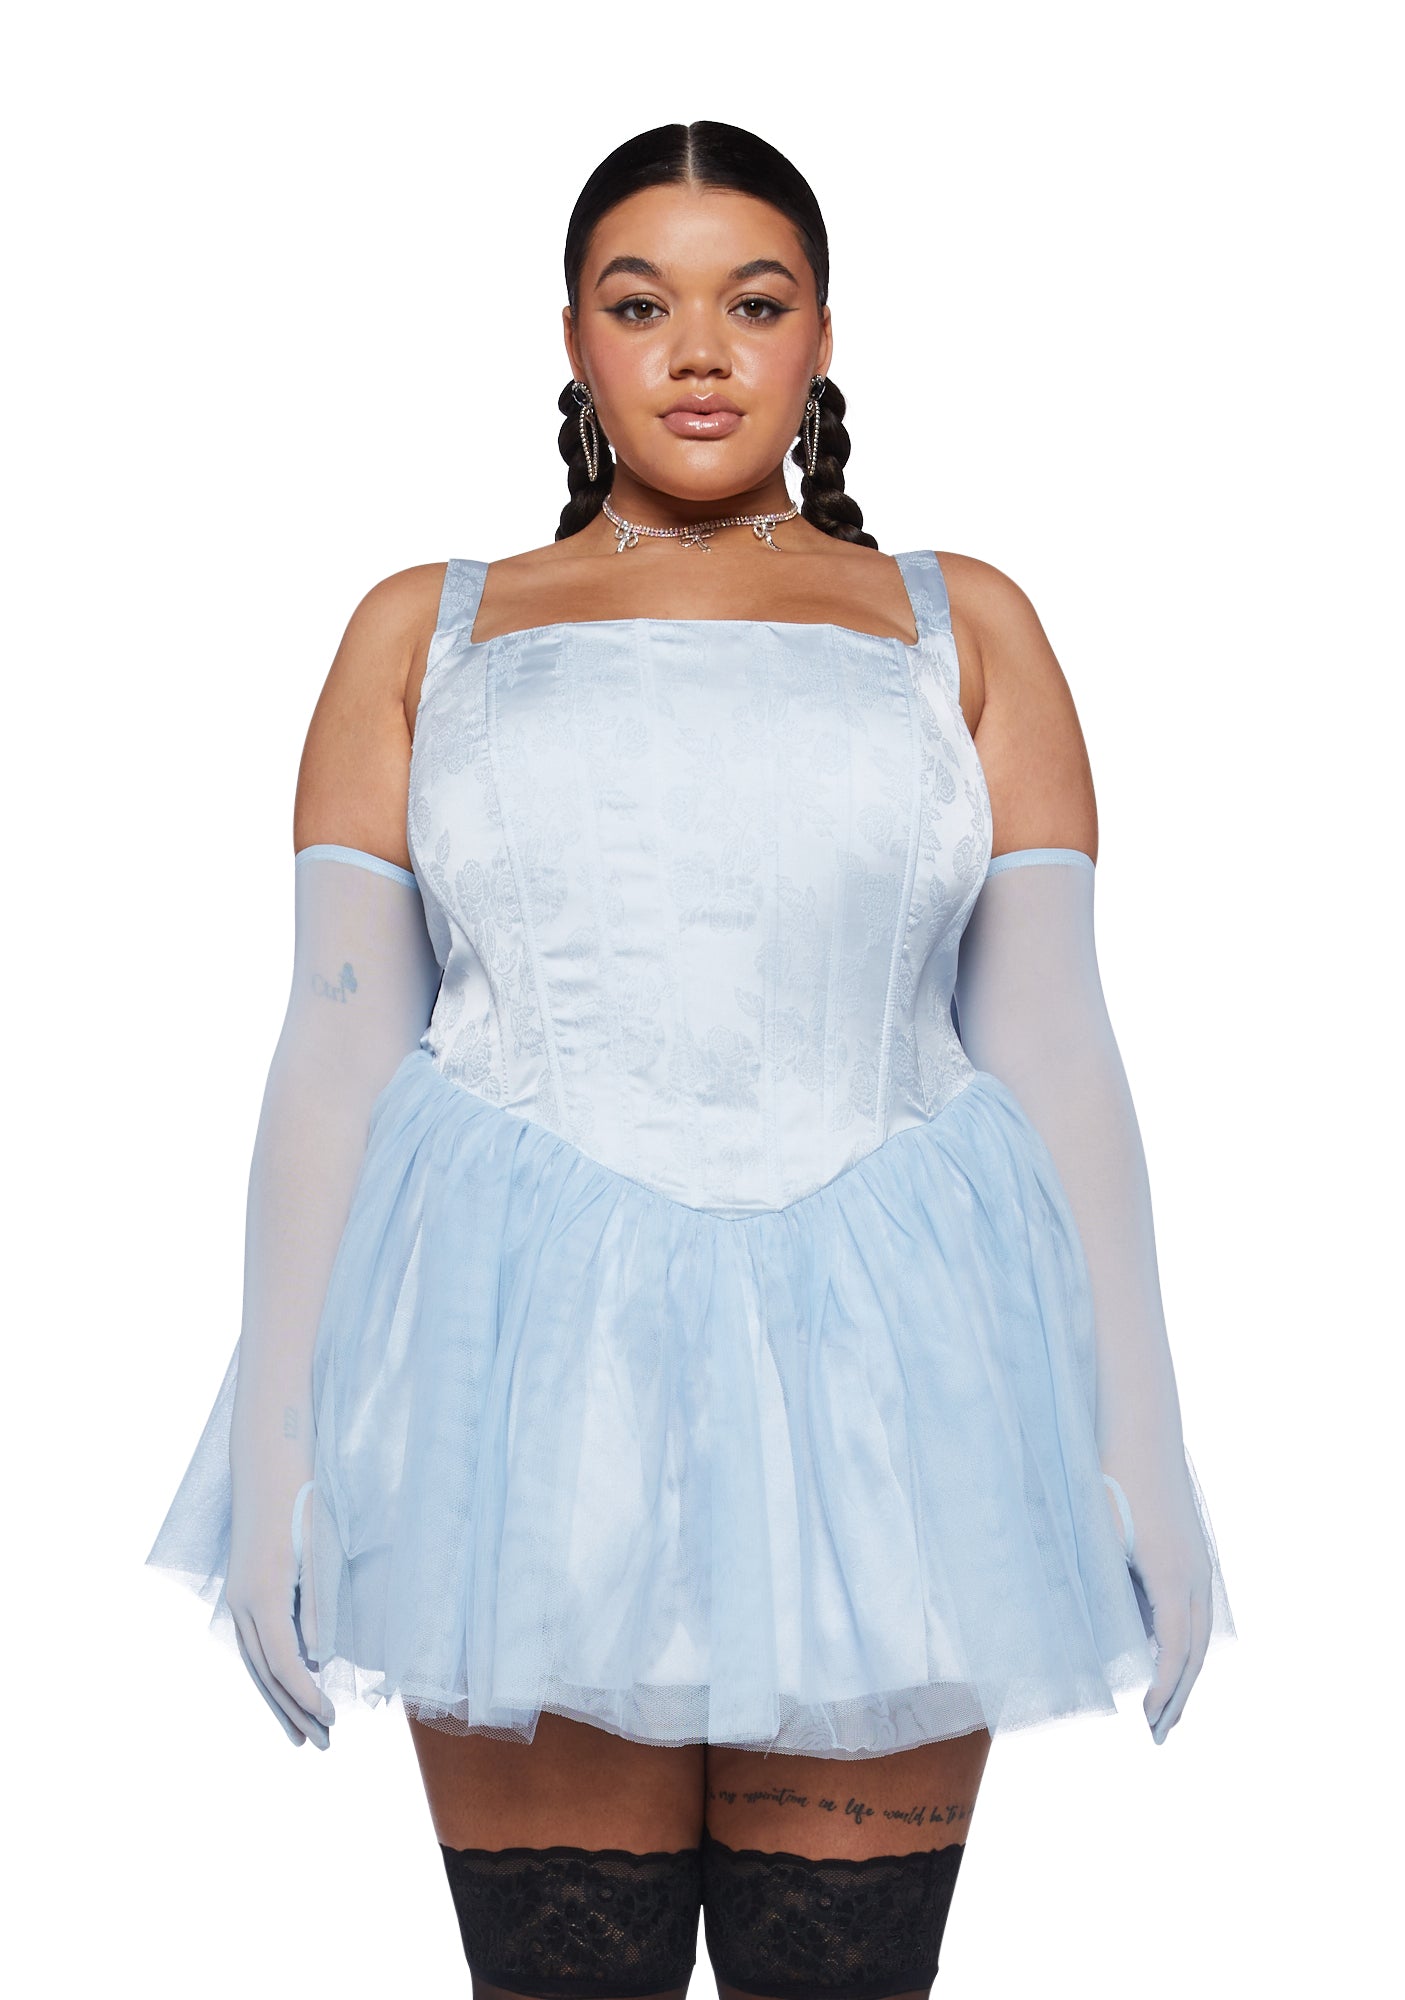 Winter Fairy, Snow Queen - Woman In Light Blue Tulle Dress Outdoor